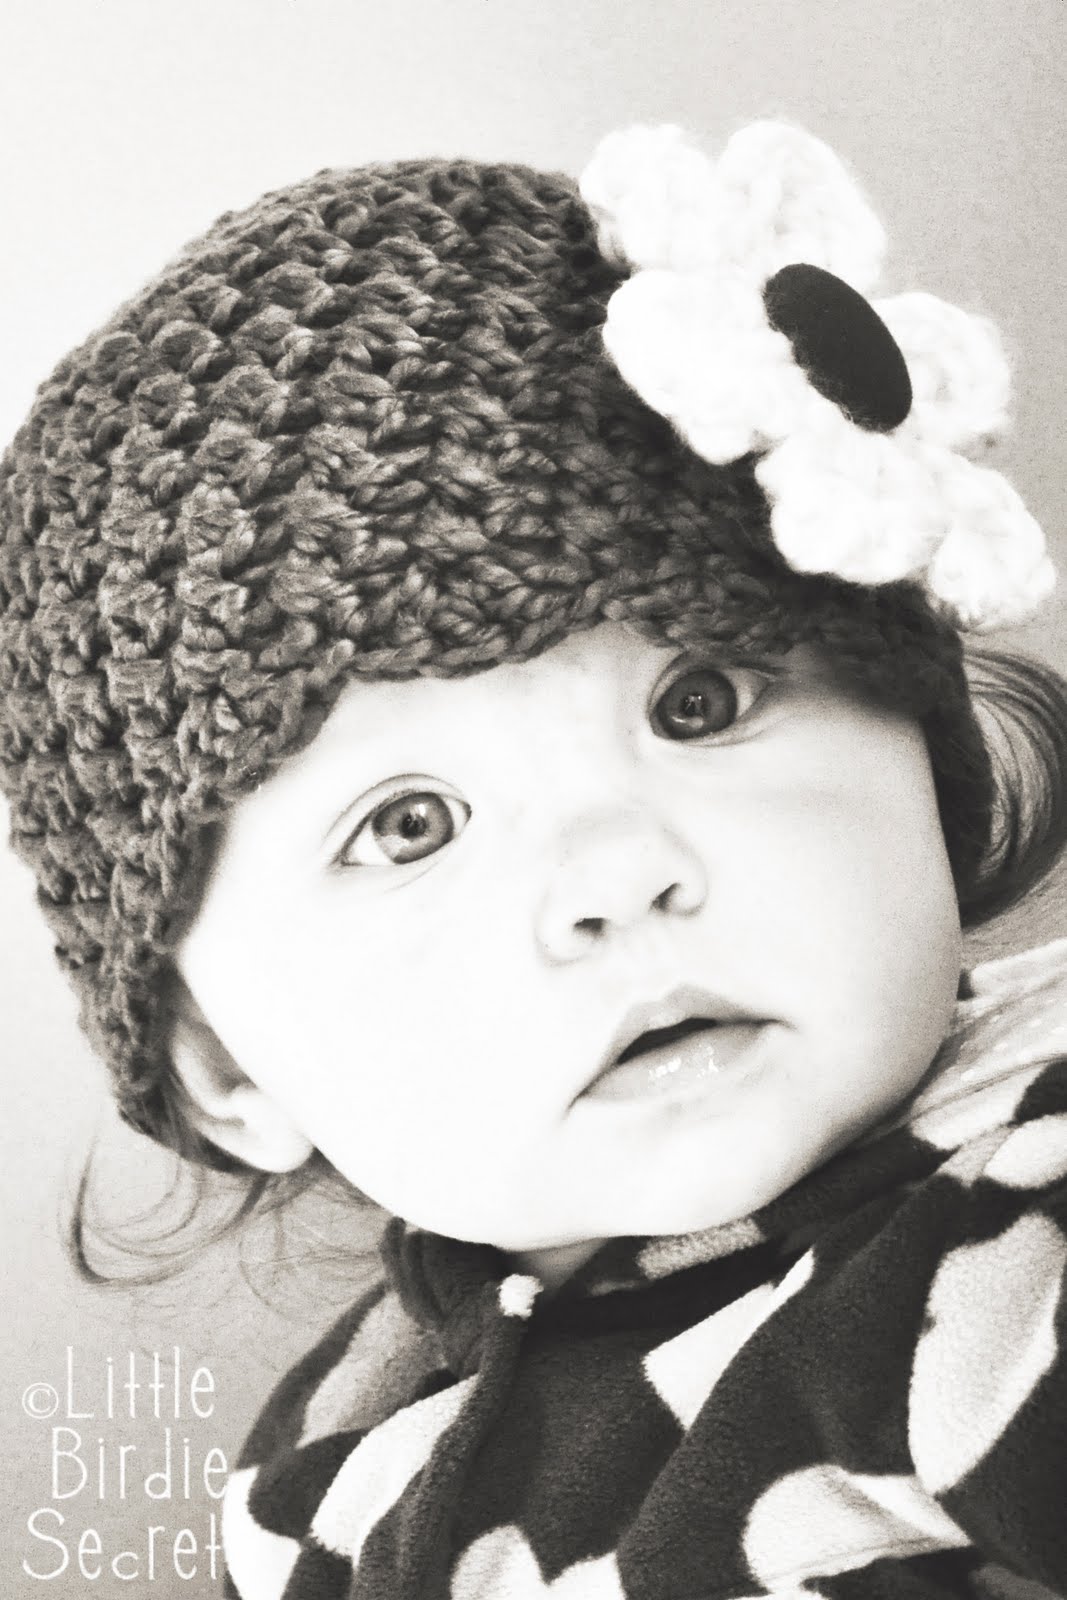 Baby Crochet Hat Patterns Free